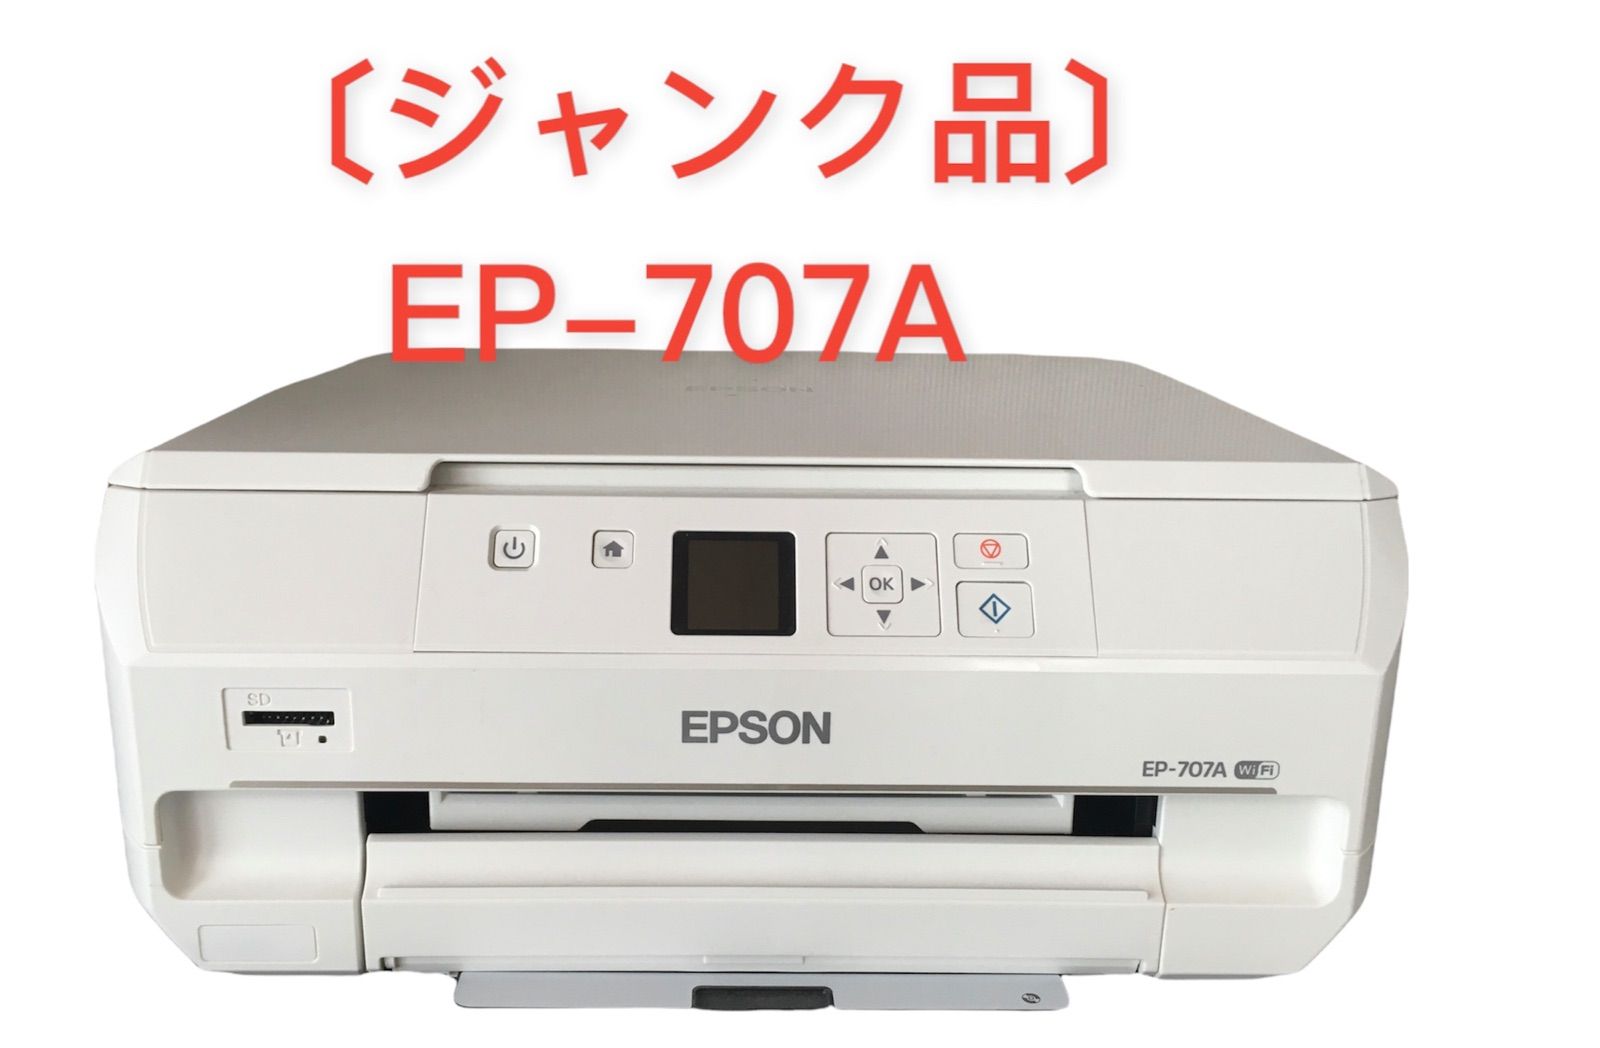 EPSON EP-707A 〔ジャンク品〕 - リサイクルショップ マサやん - メルカリ